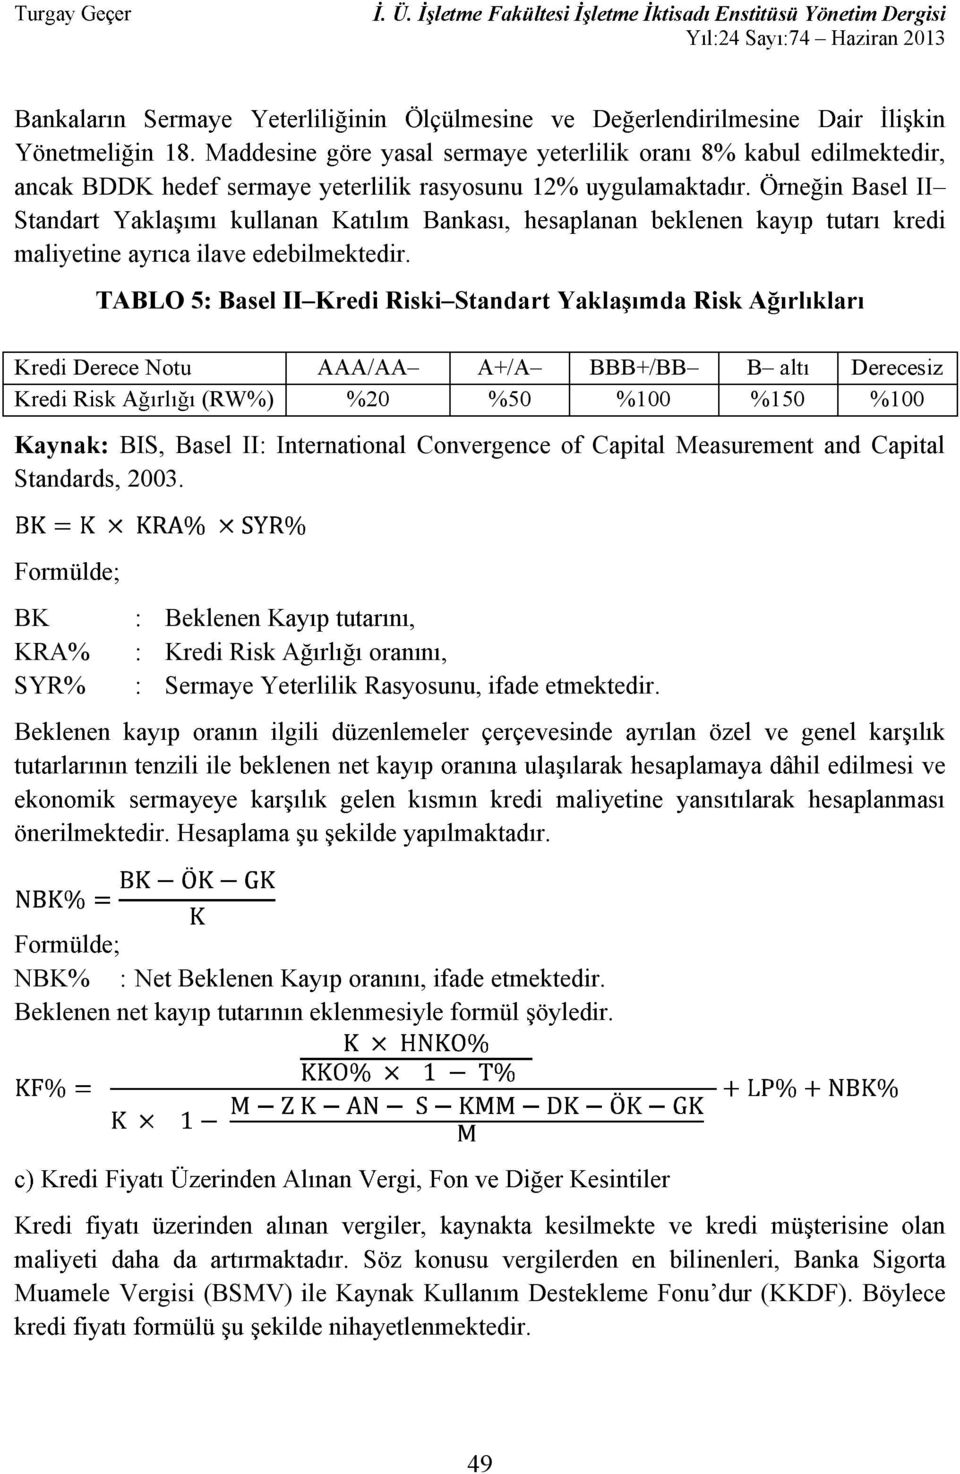 Kaynak: BIS, Basel II: International Convergence of Capital Measurement and Capital Standards, 2003.